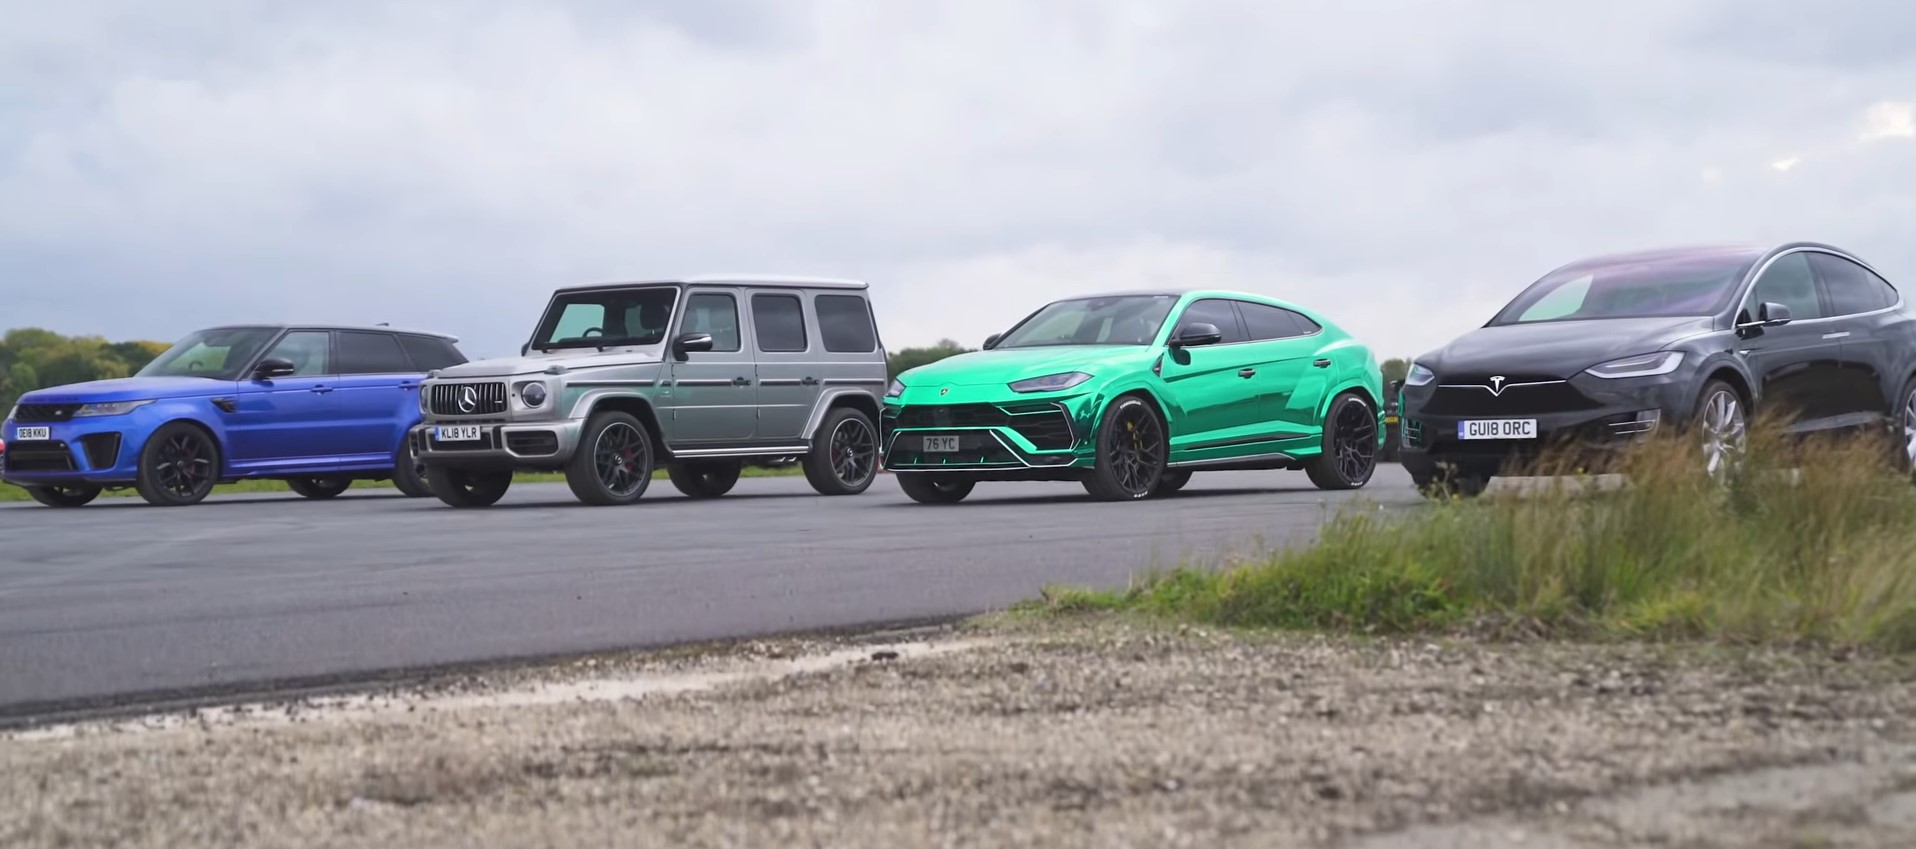 Drag Race, carrera entre SUVs. Tesla Model X, Lamborghini Urus, Range Rover SVR, y Mercedes G63